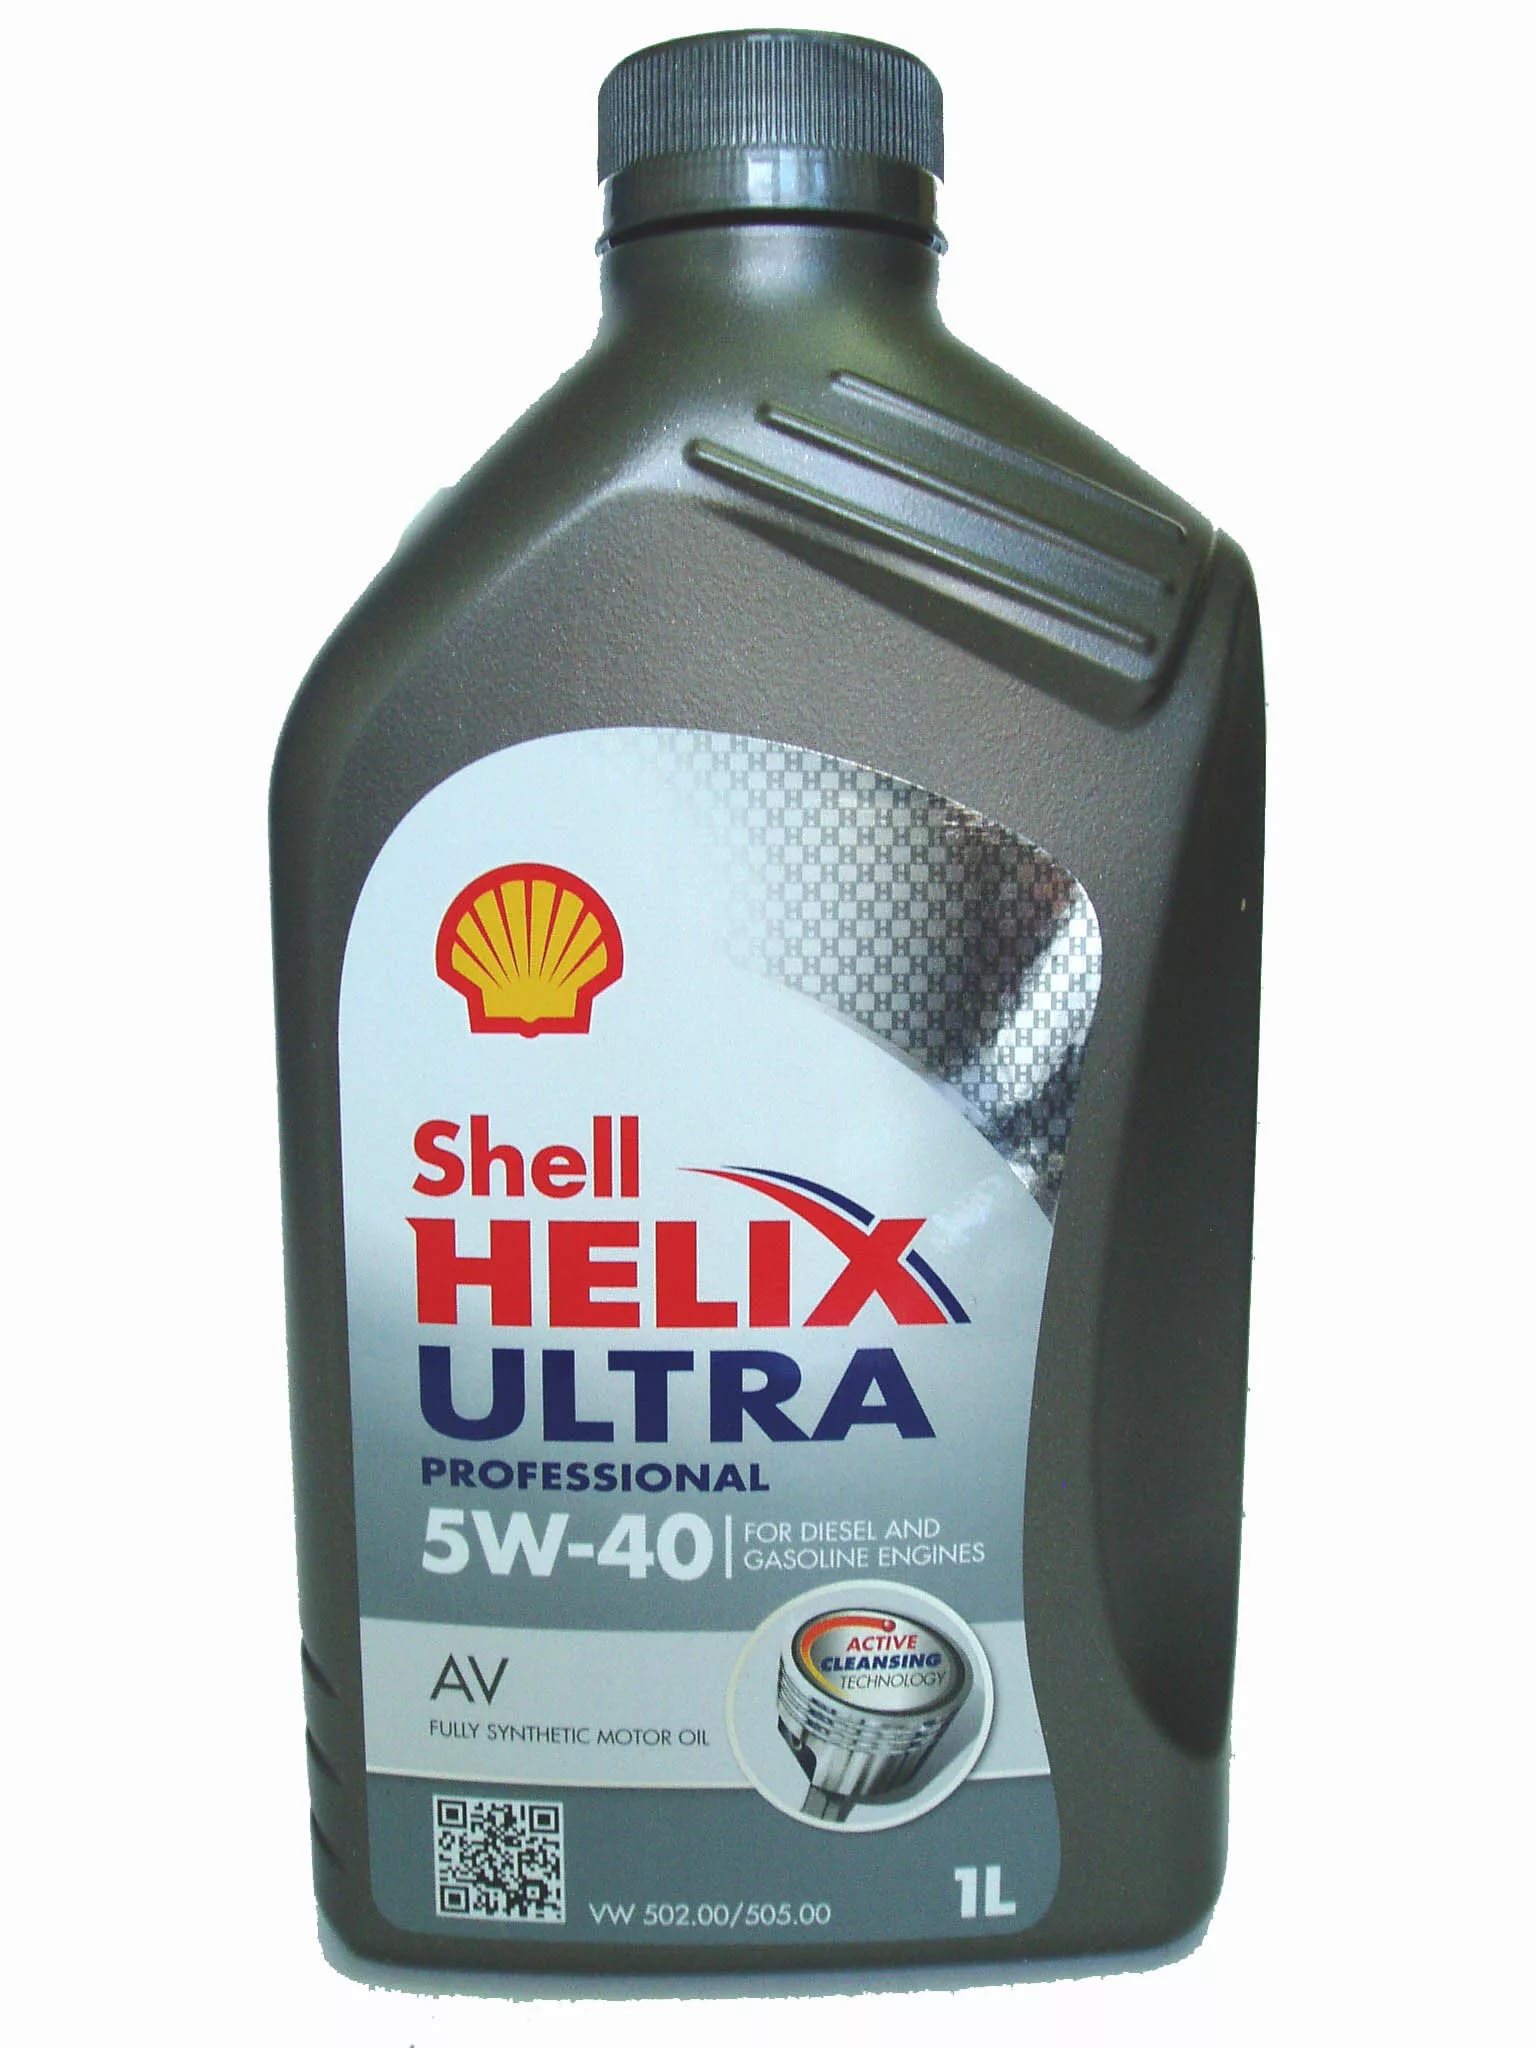 Ultra professional av. Shell Helix Ultra professional av 5w-40 4л. Shell Helix Ultra professional av 5w-40. Shell Helix Ultra professional 5w40. Helix Ultra professional av 5w-40.